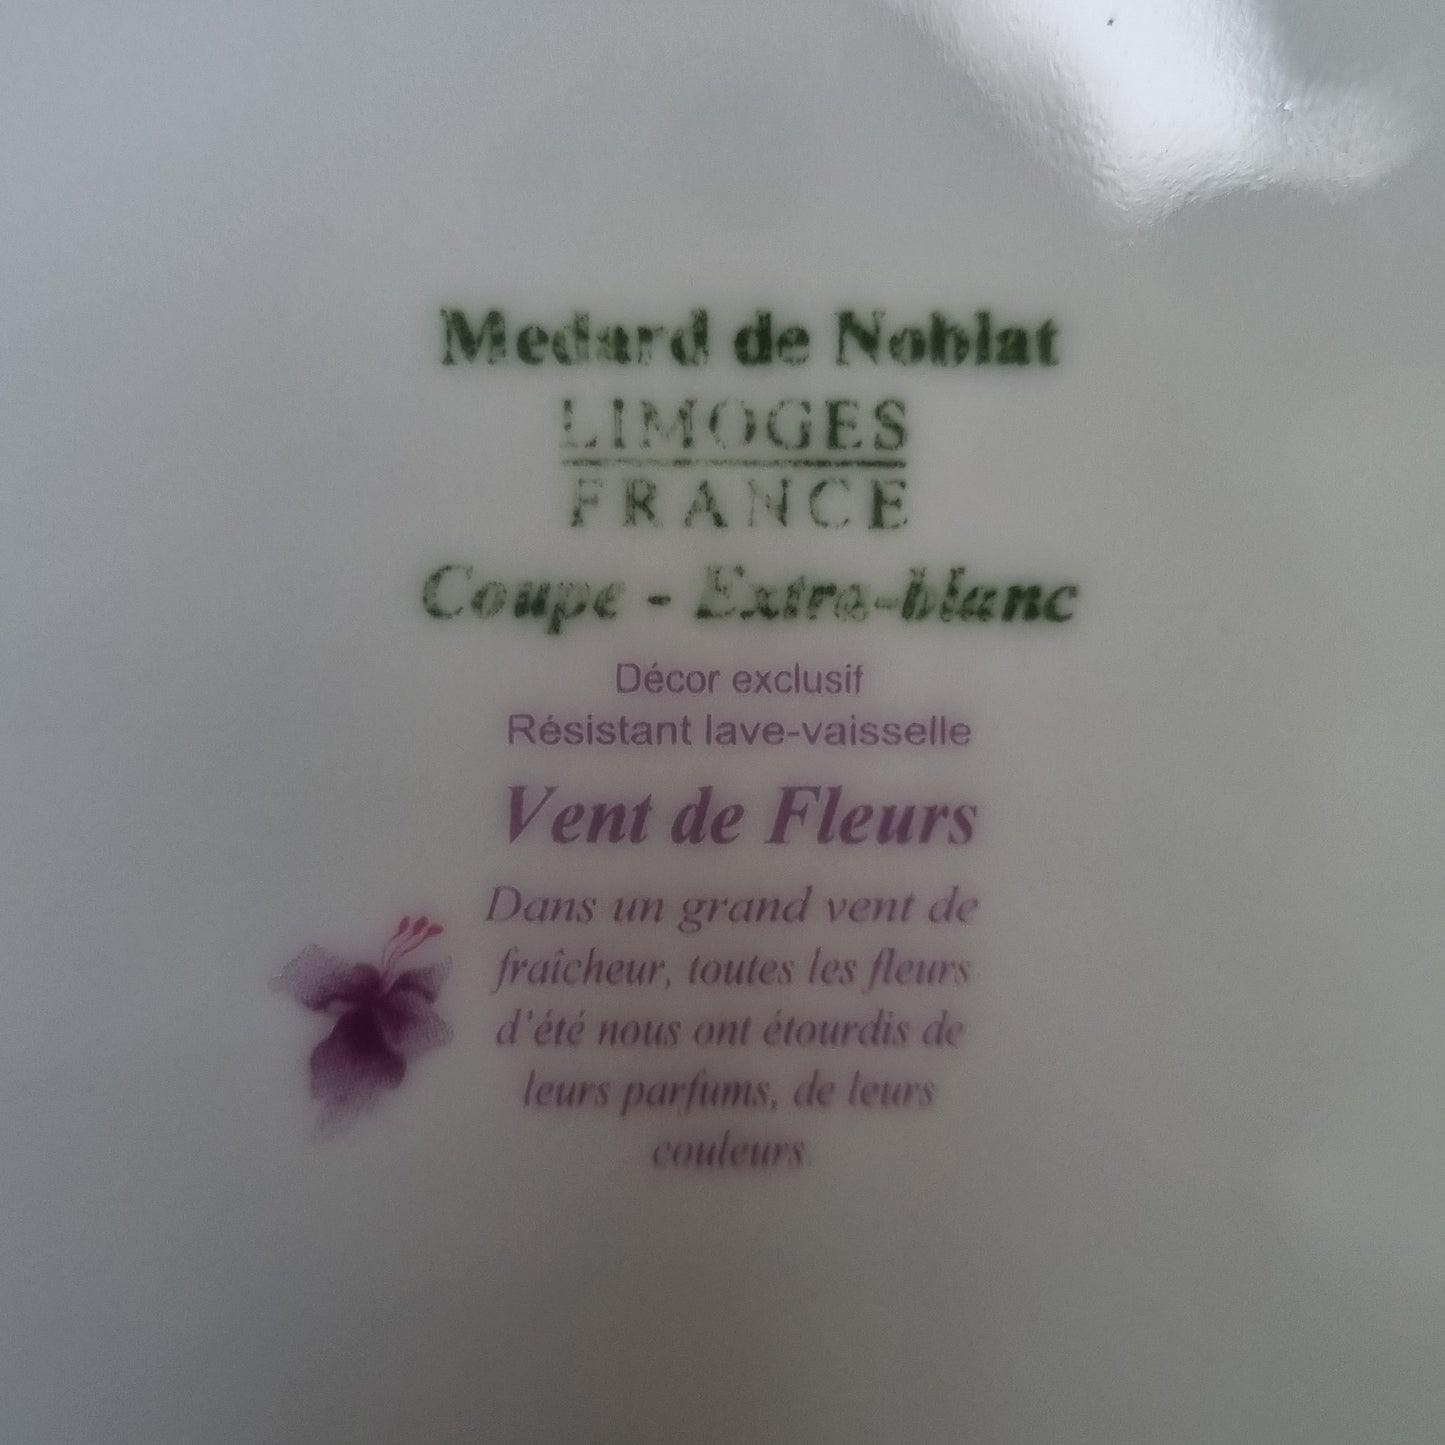 8 platos Medard de Noblat "Fleur de vents"